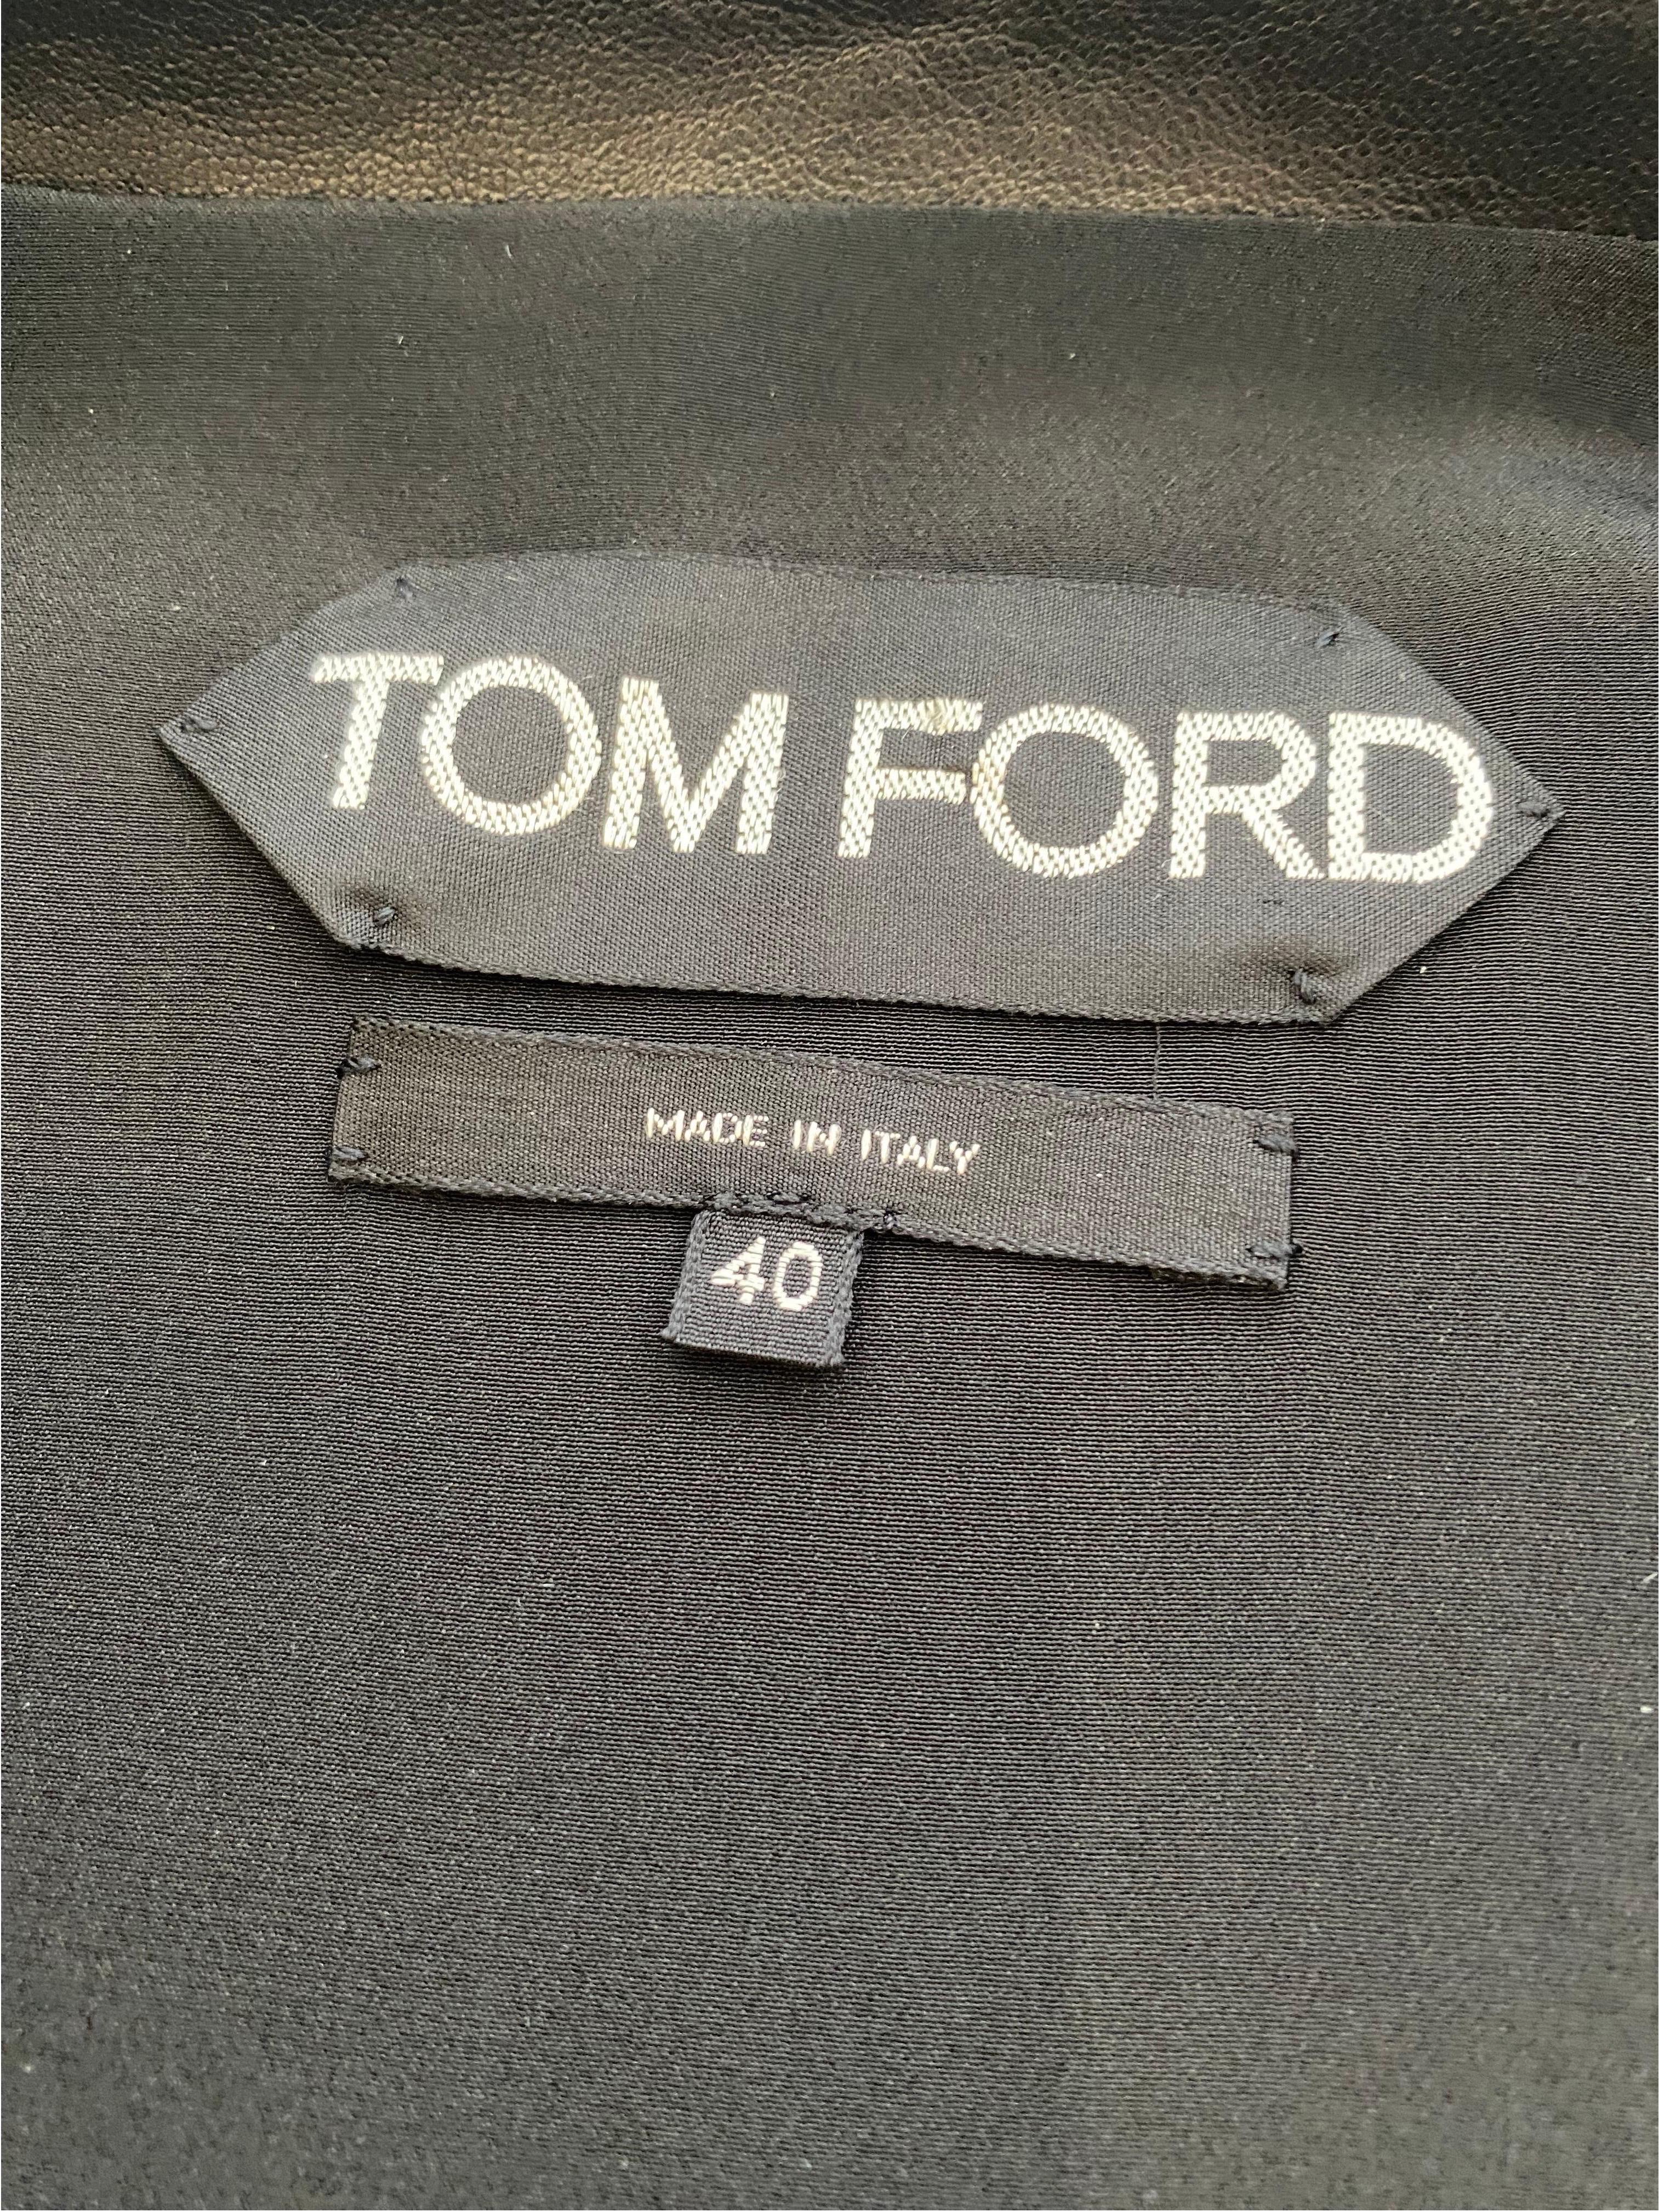 Tom Ford metallic leather jacket with fastener.
Size 40
Bust : 39” / Waist 39”/ jacket length: 21” 
Sleeve length : 23” / shoulder : 15”